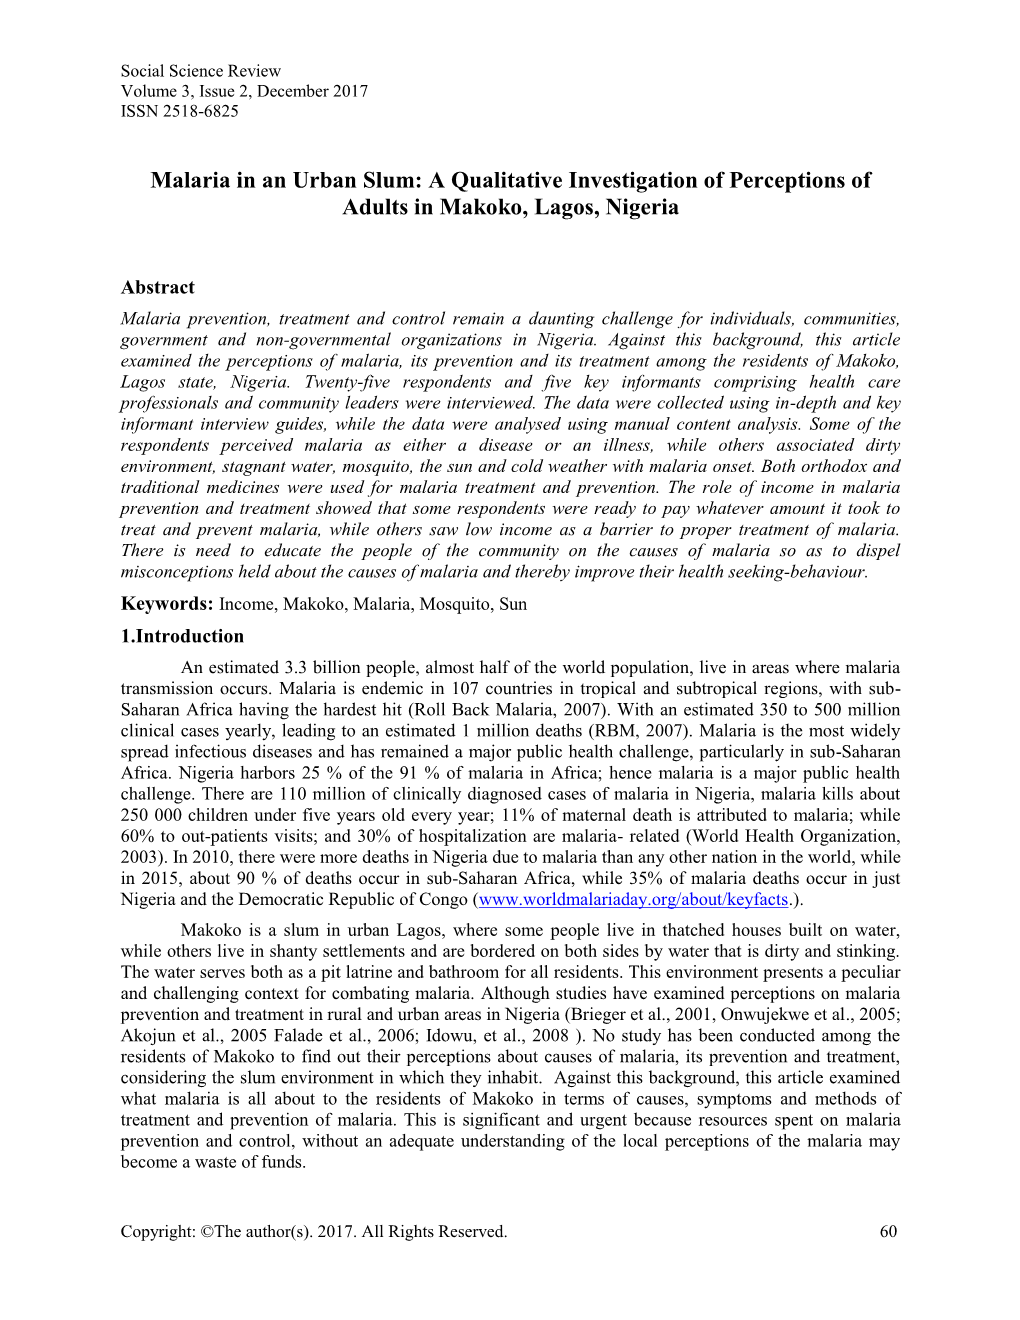 Malaria in an Urban Slum: a Qualitative Investigation of Perceptions of Adults in Makoko, Lagos, Nigeria